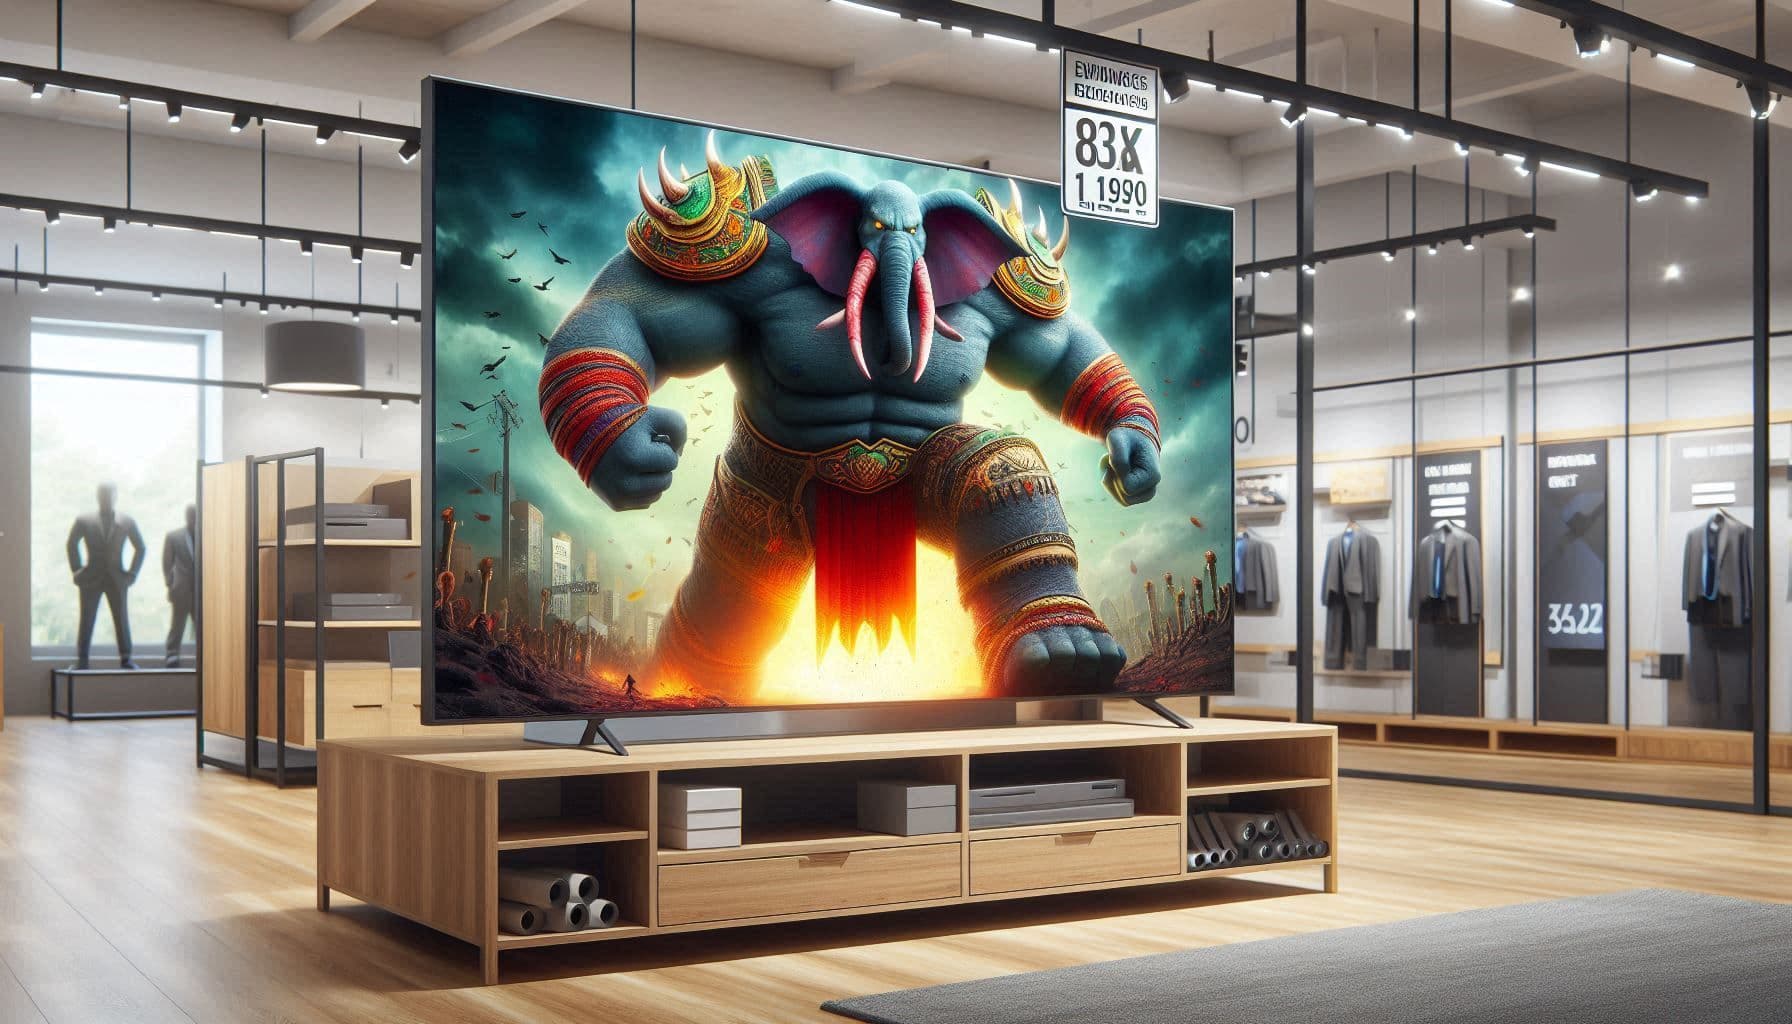 Report: Big-screen TV sales boosting UK economy